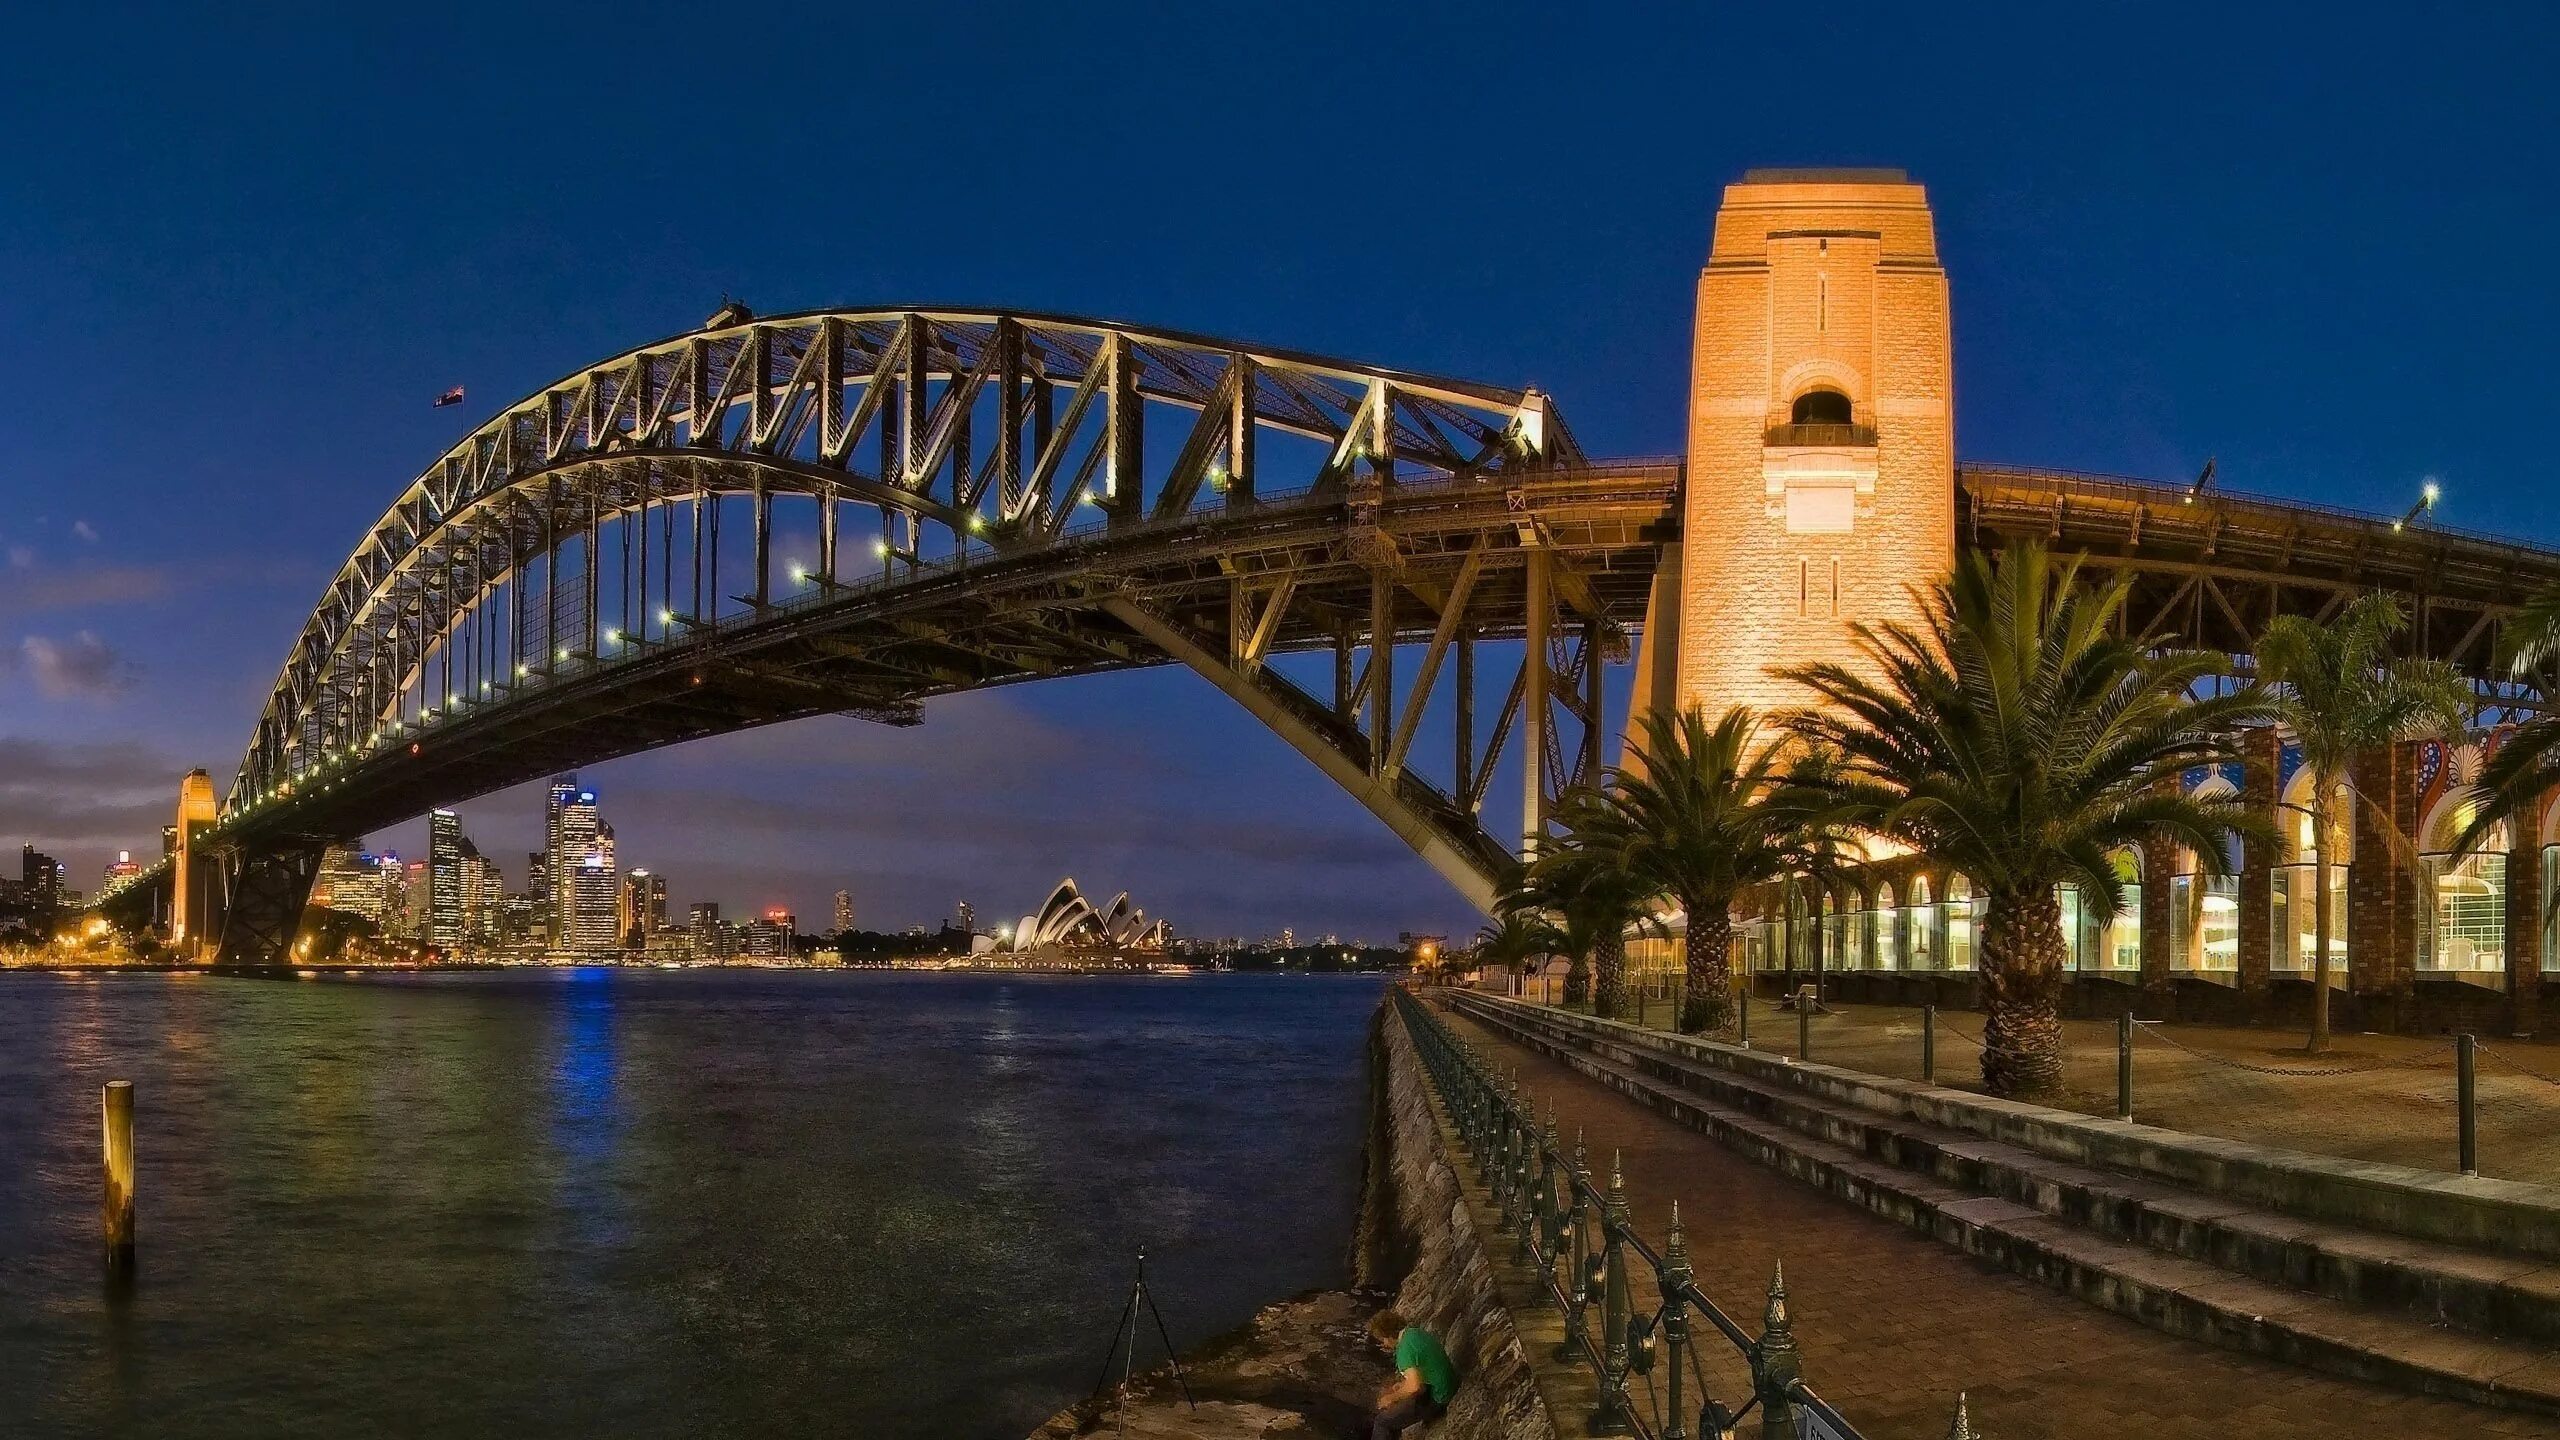 Харбор-бридж Австралия. Харбор-бридж Сидней. Австралия.Сидней.мост Харбор-бридж. Мост Харбор бридж.